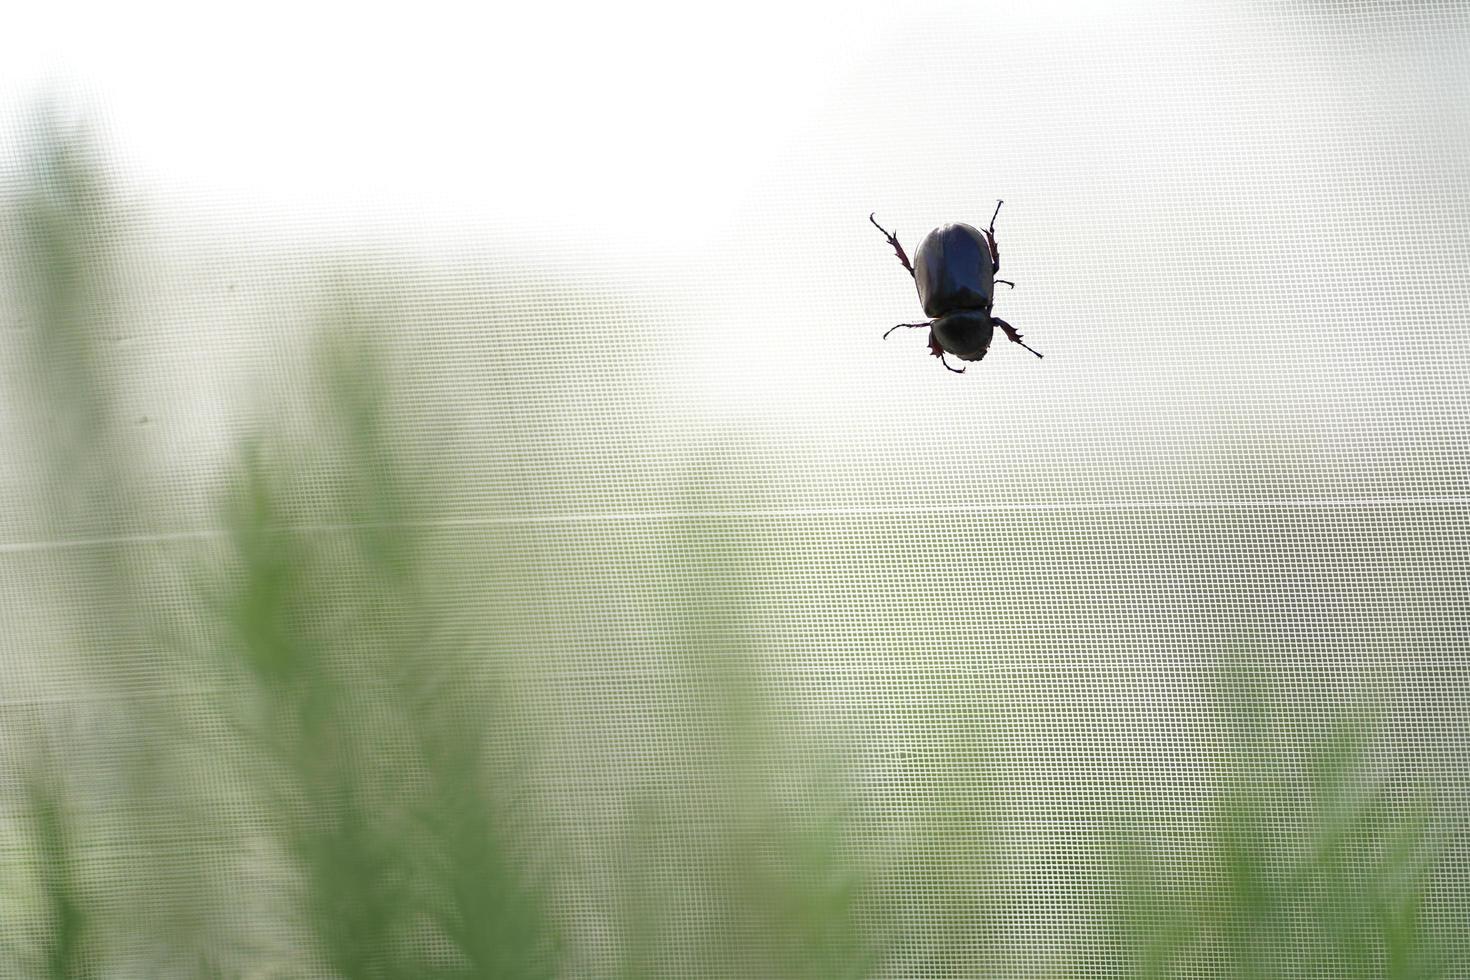 Rhino beetle on nets in the garden photo